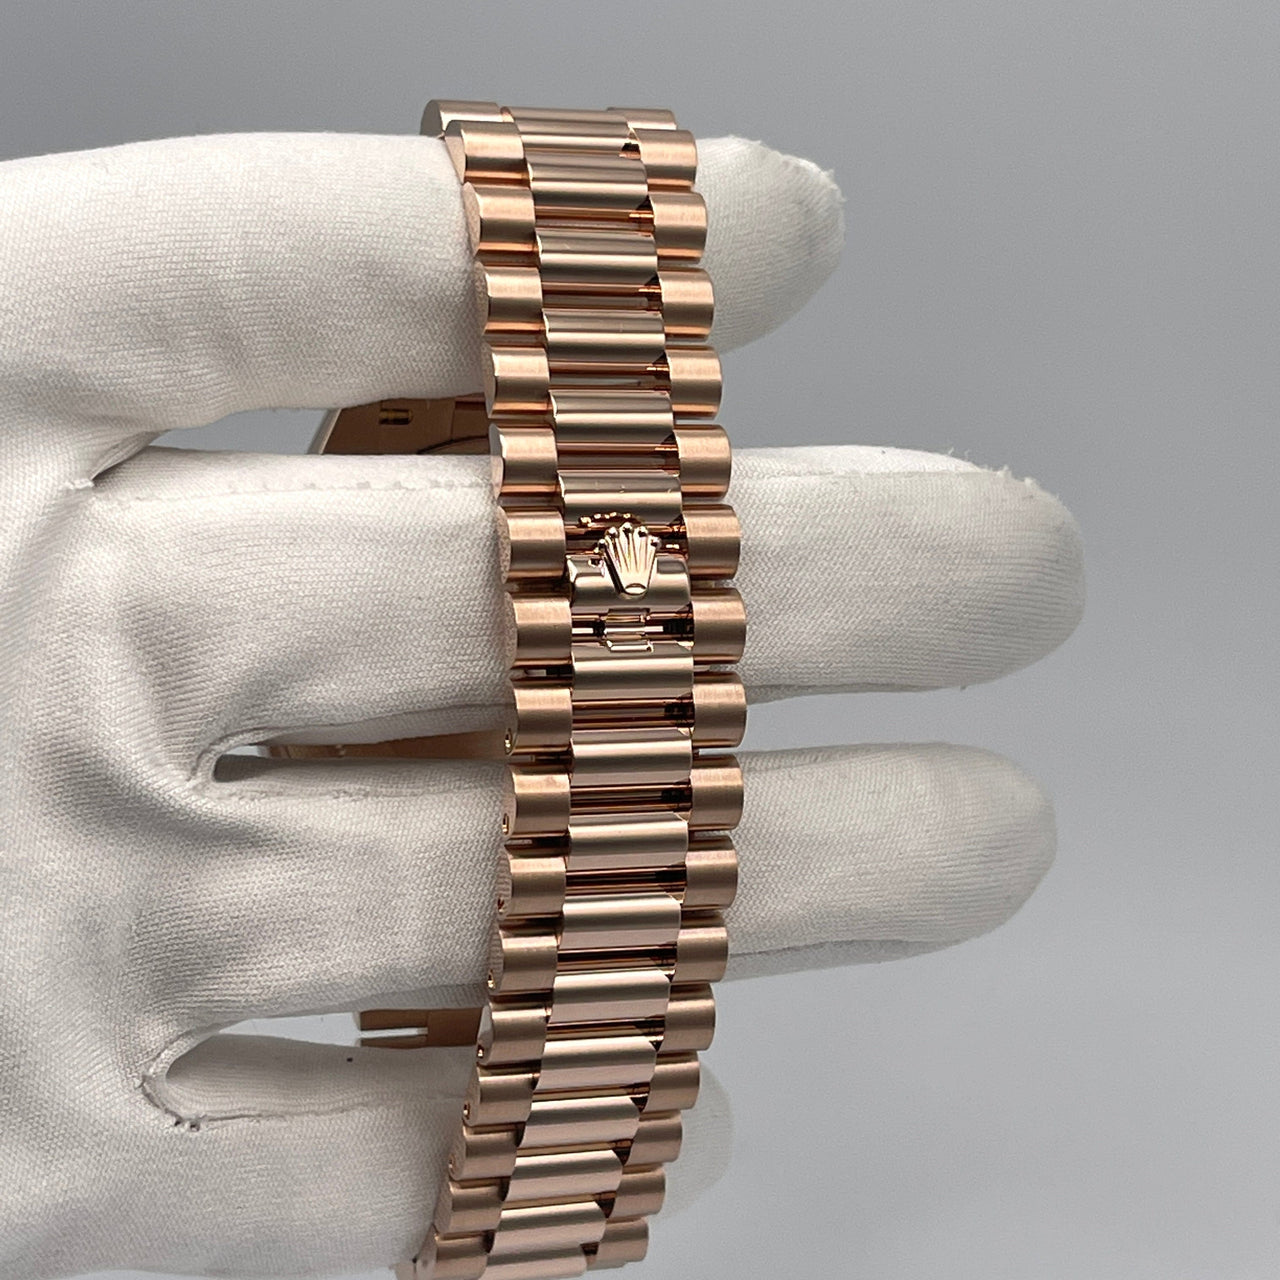 Luxury Watch Rolex Day-Date 40 Rose Gold Chocolate Roman Dial 228235 Wrist Aficionado